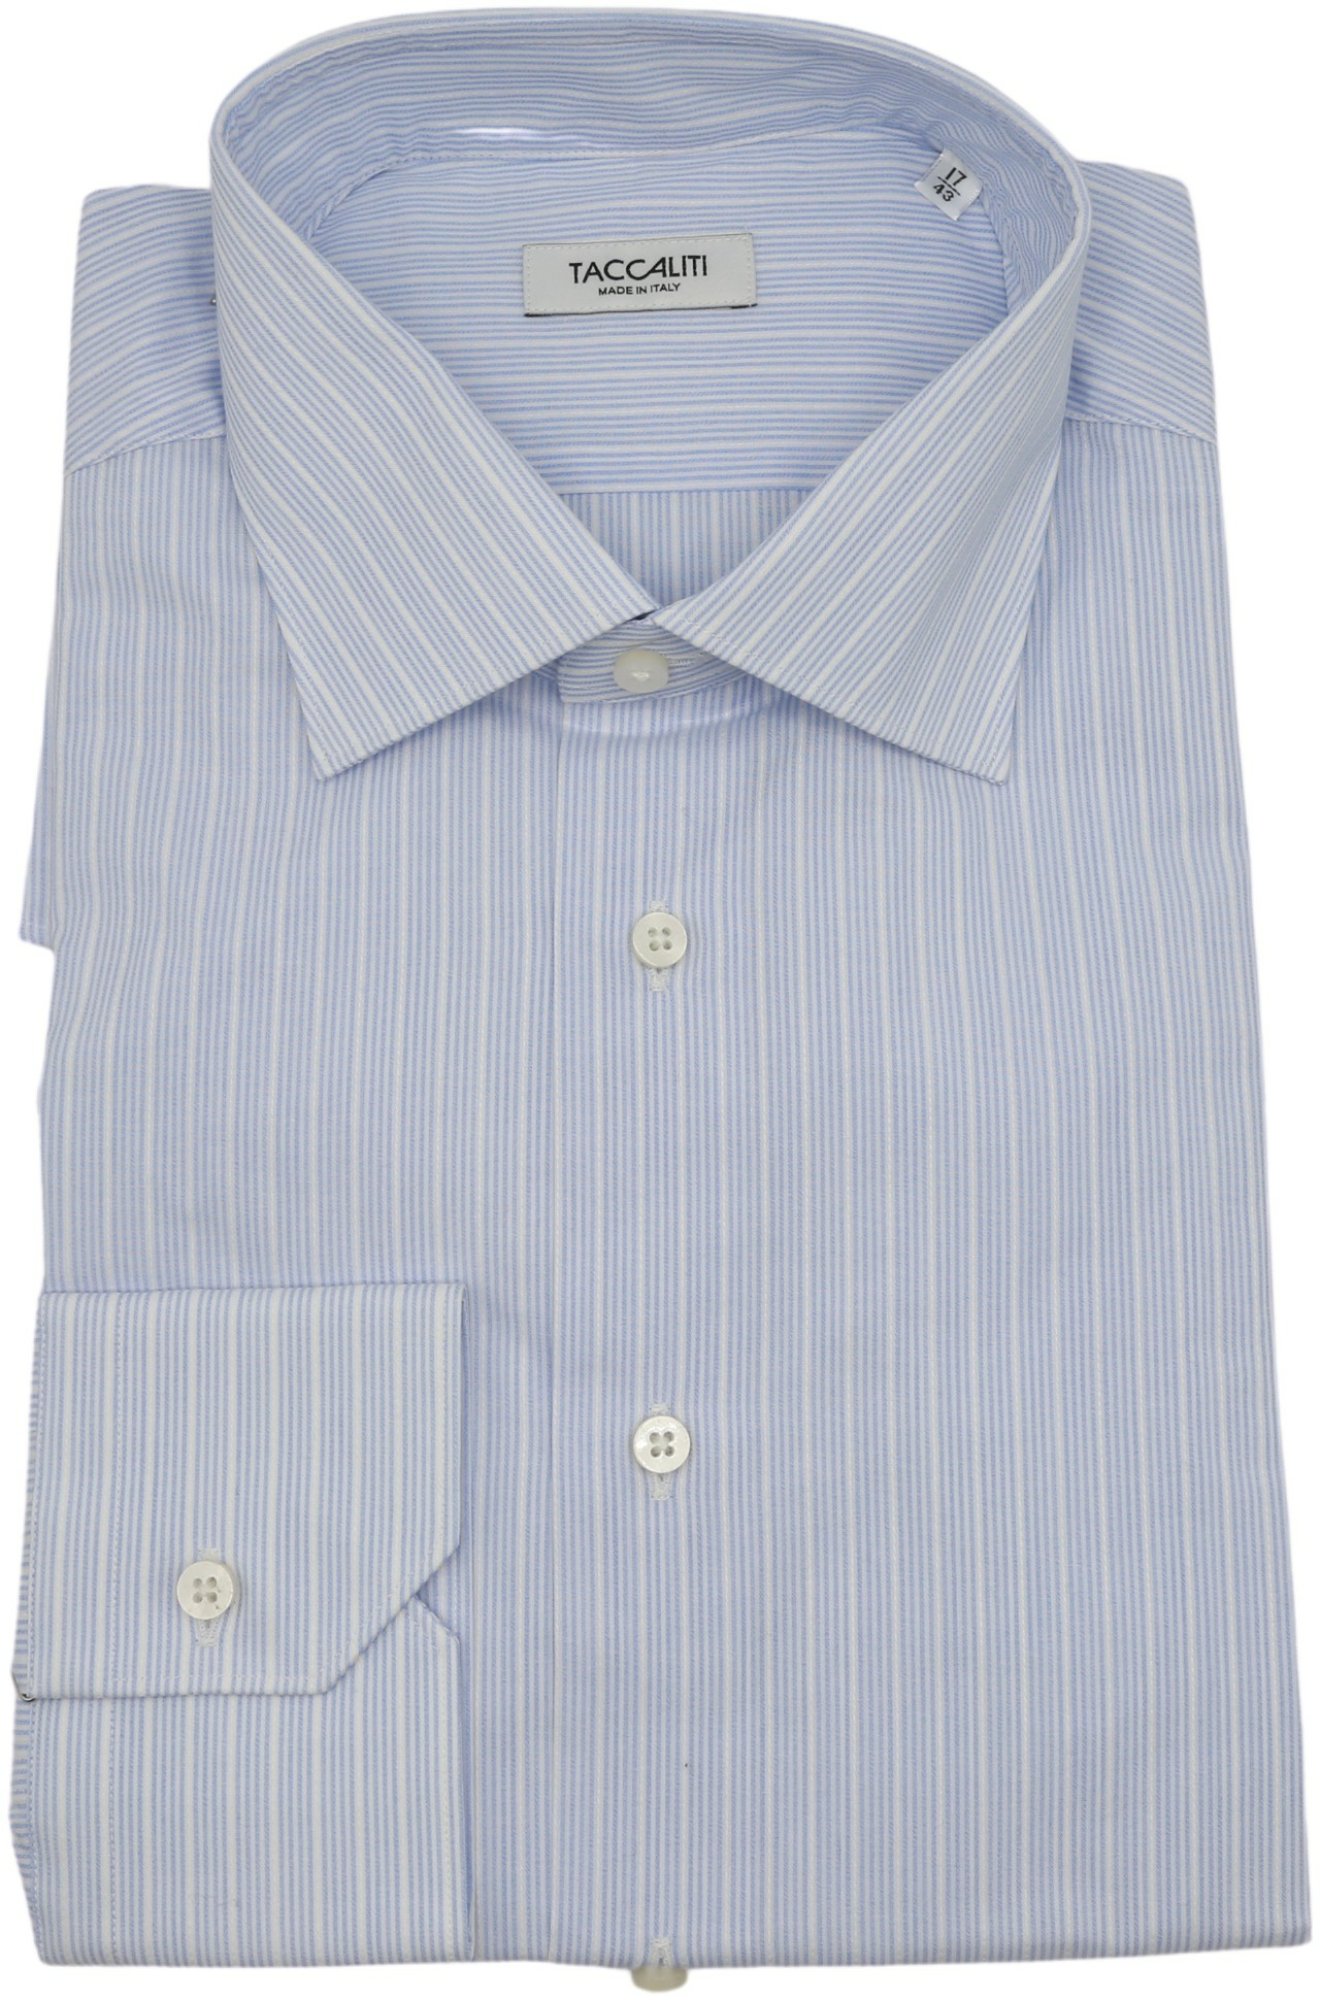 Taccaliti Men's Balanced Stripes Dress Shirt | eBay